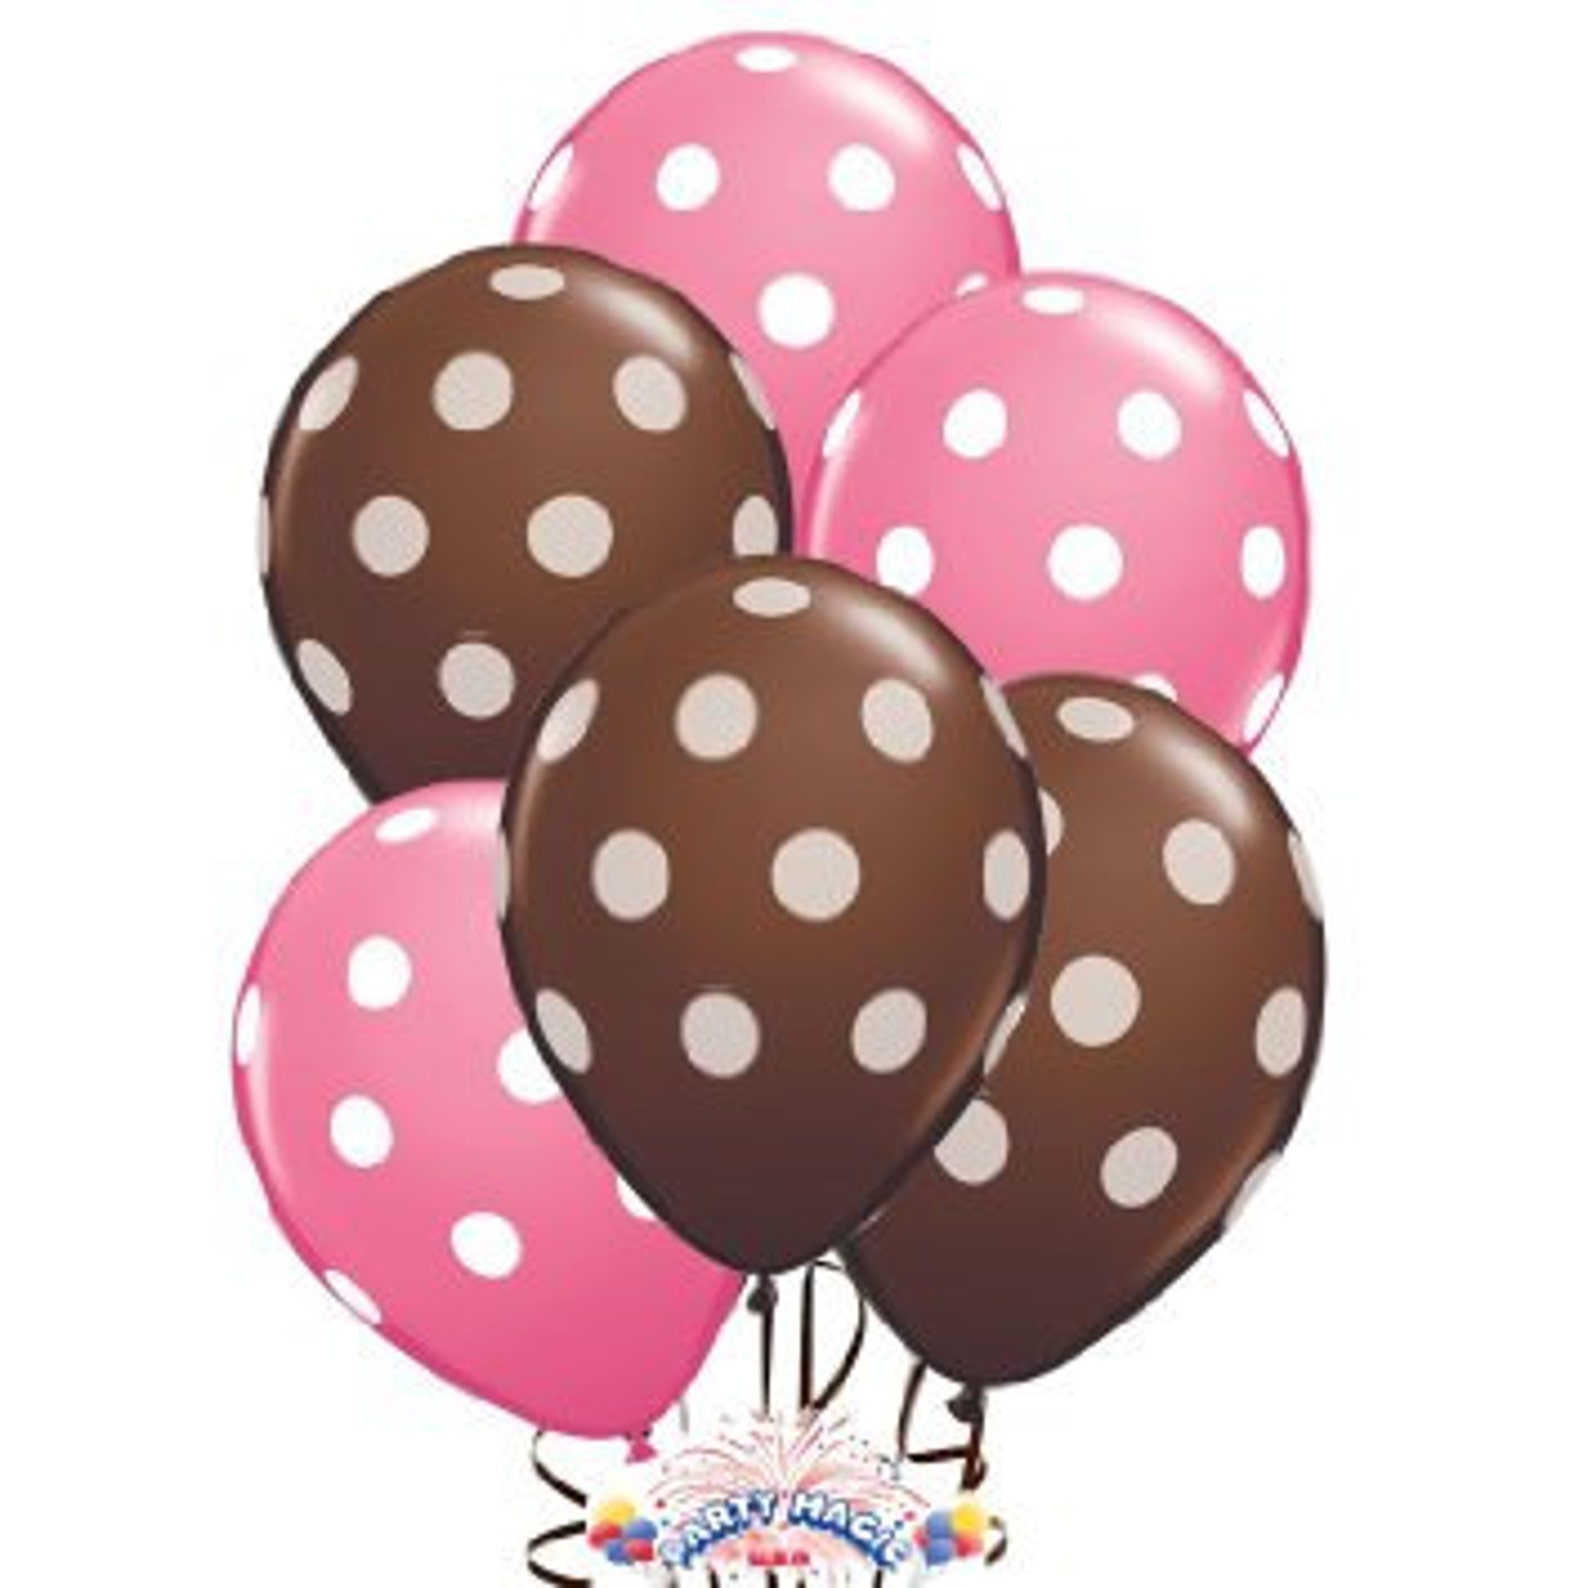 15 Lime Green and Hot Berry Pink polka dots balloons Qualatex | Etsy